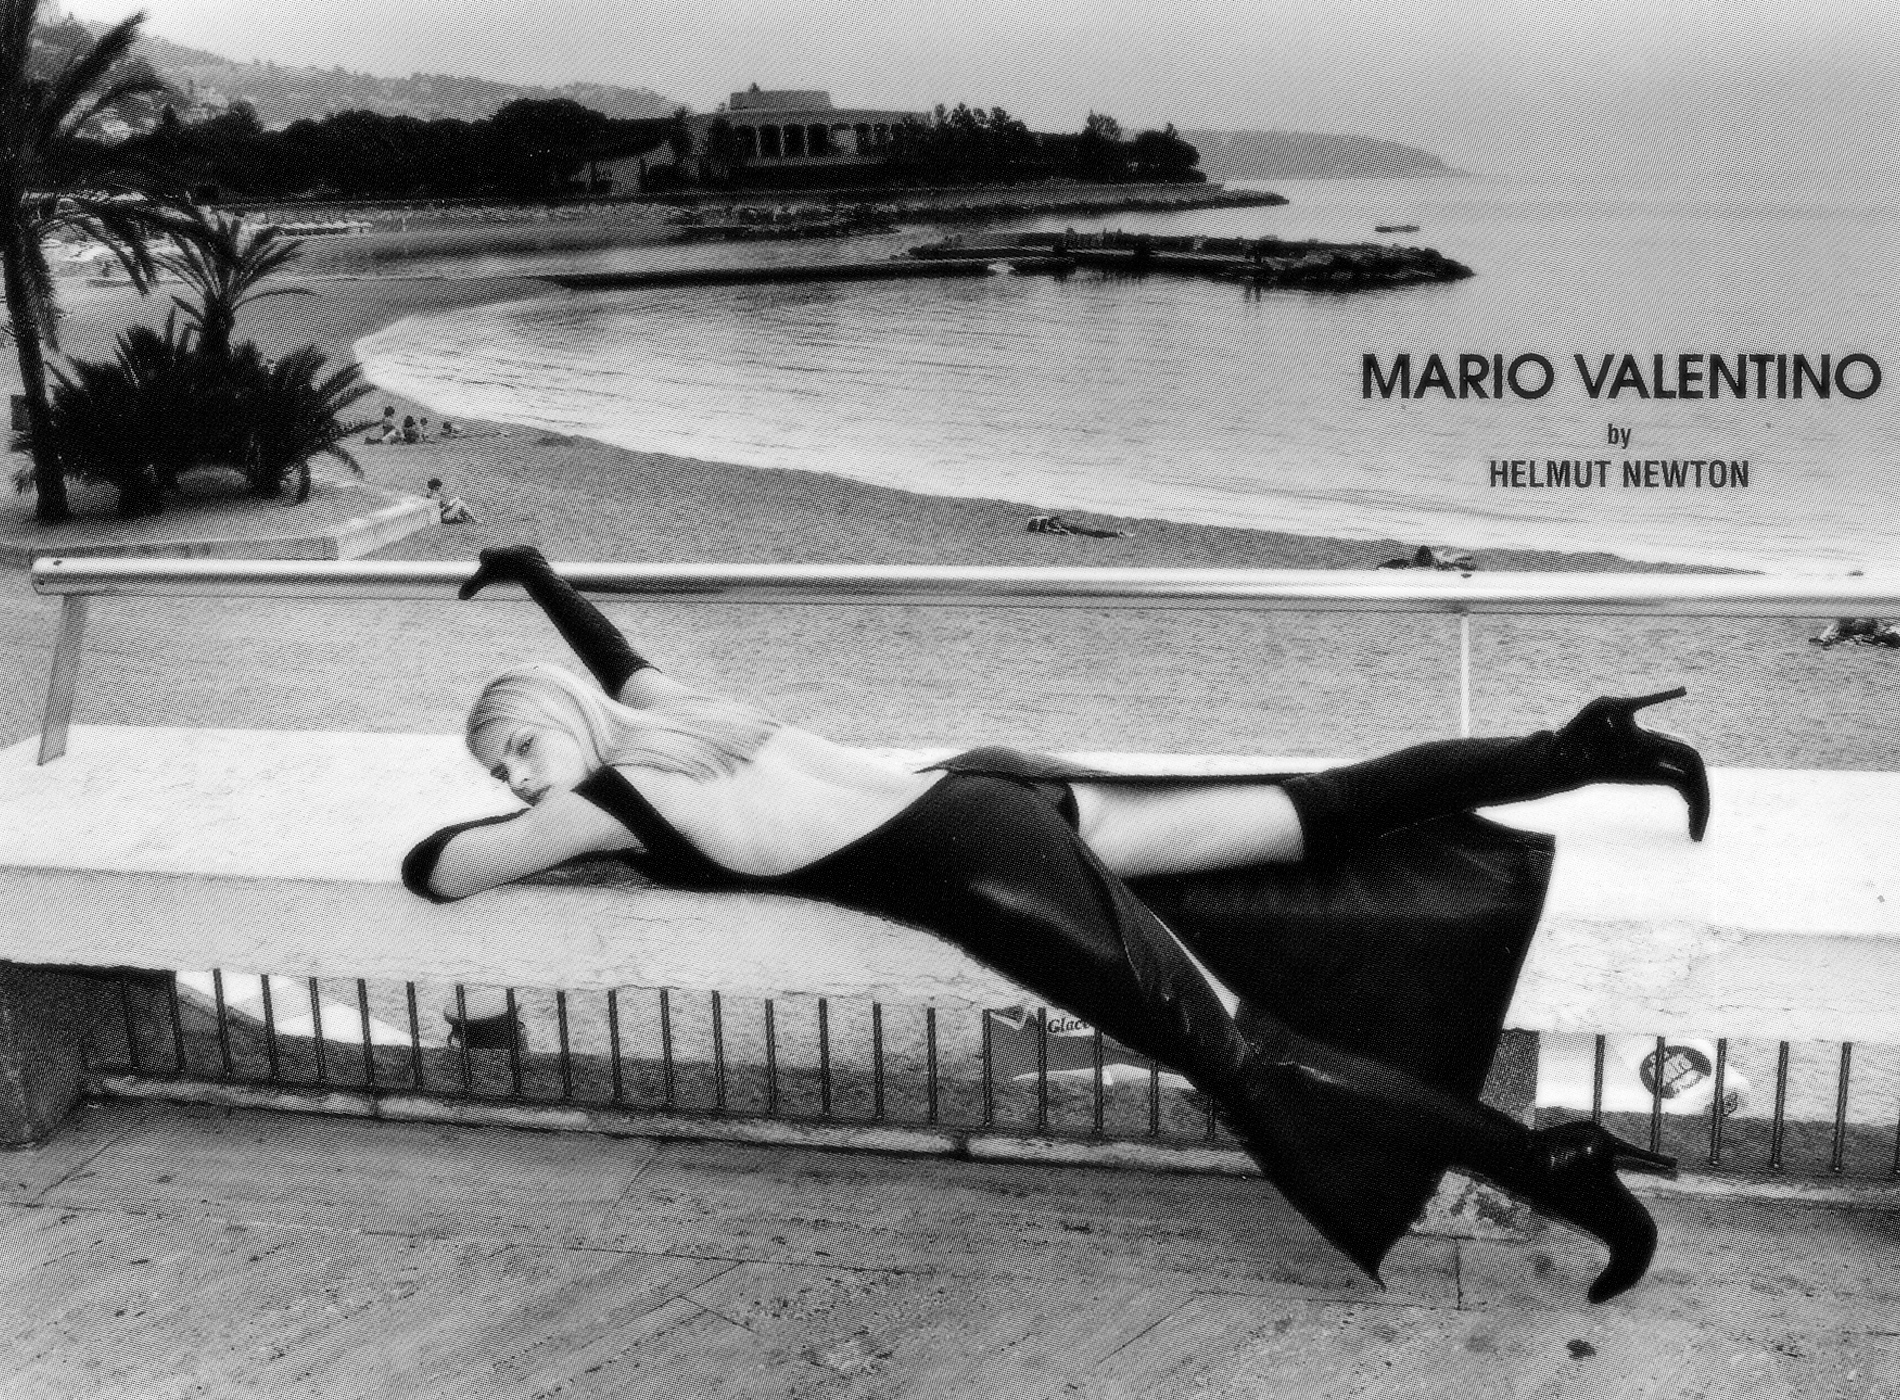 Mario Valentino, the rise of luxury